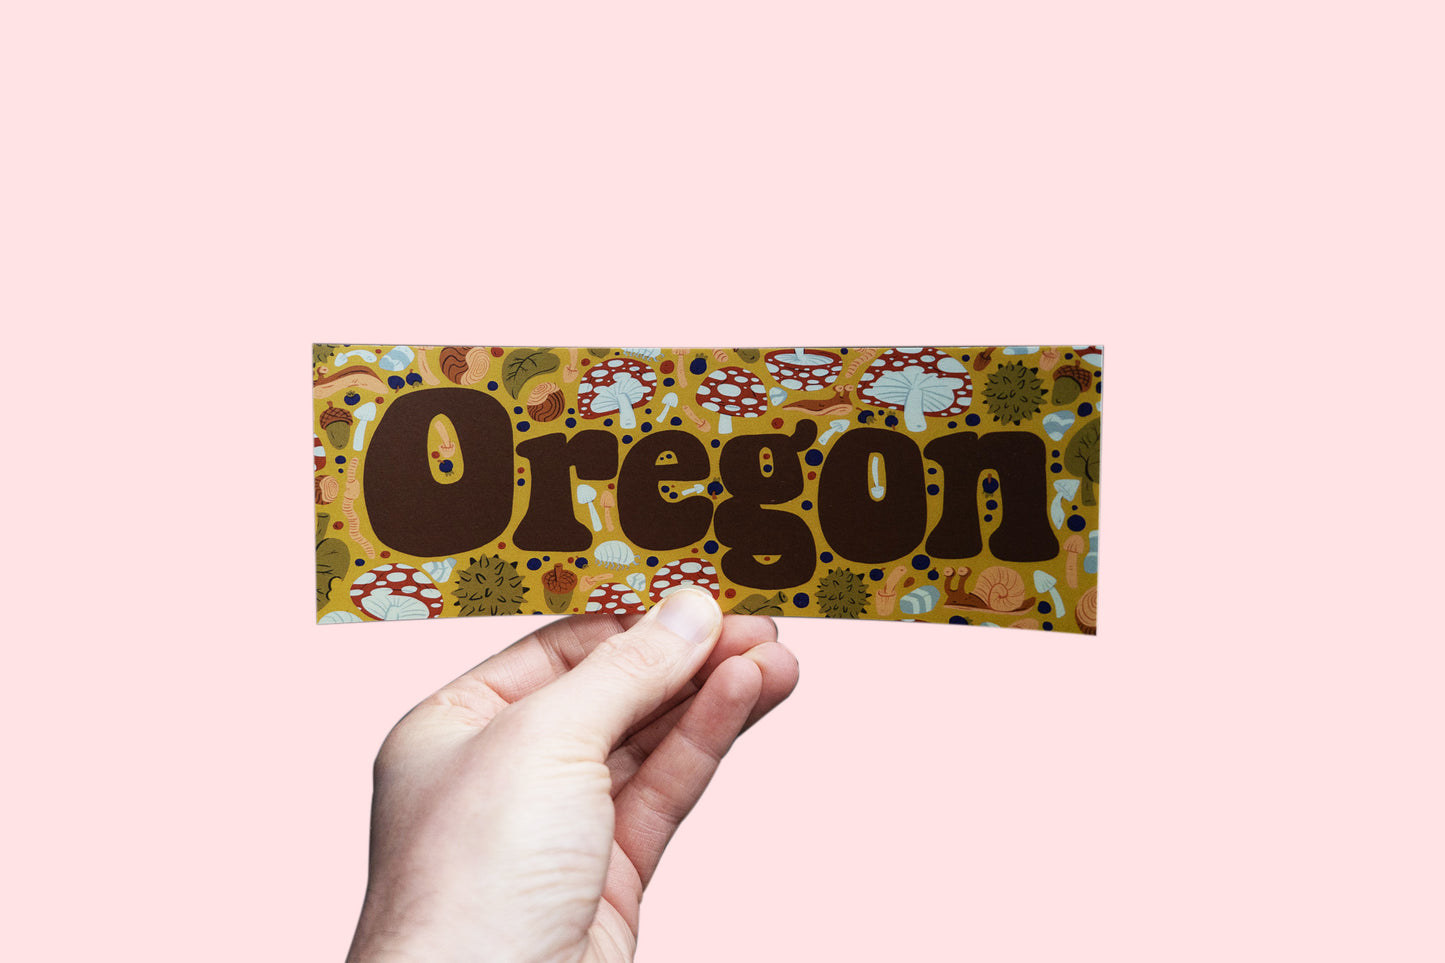 Oregon Bumper Sticker held